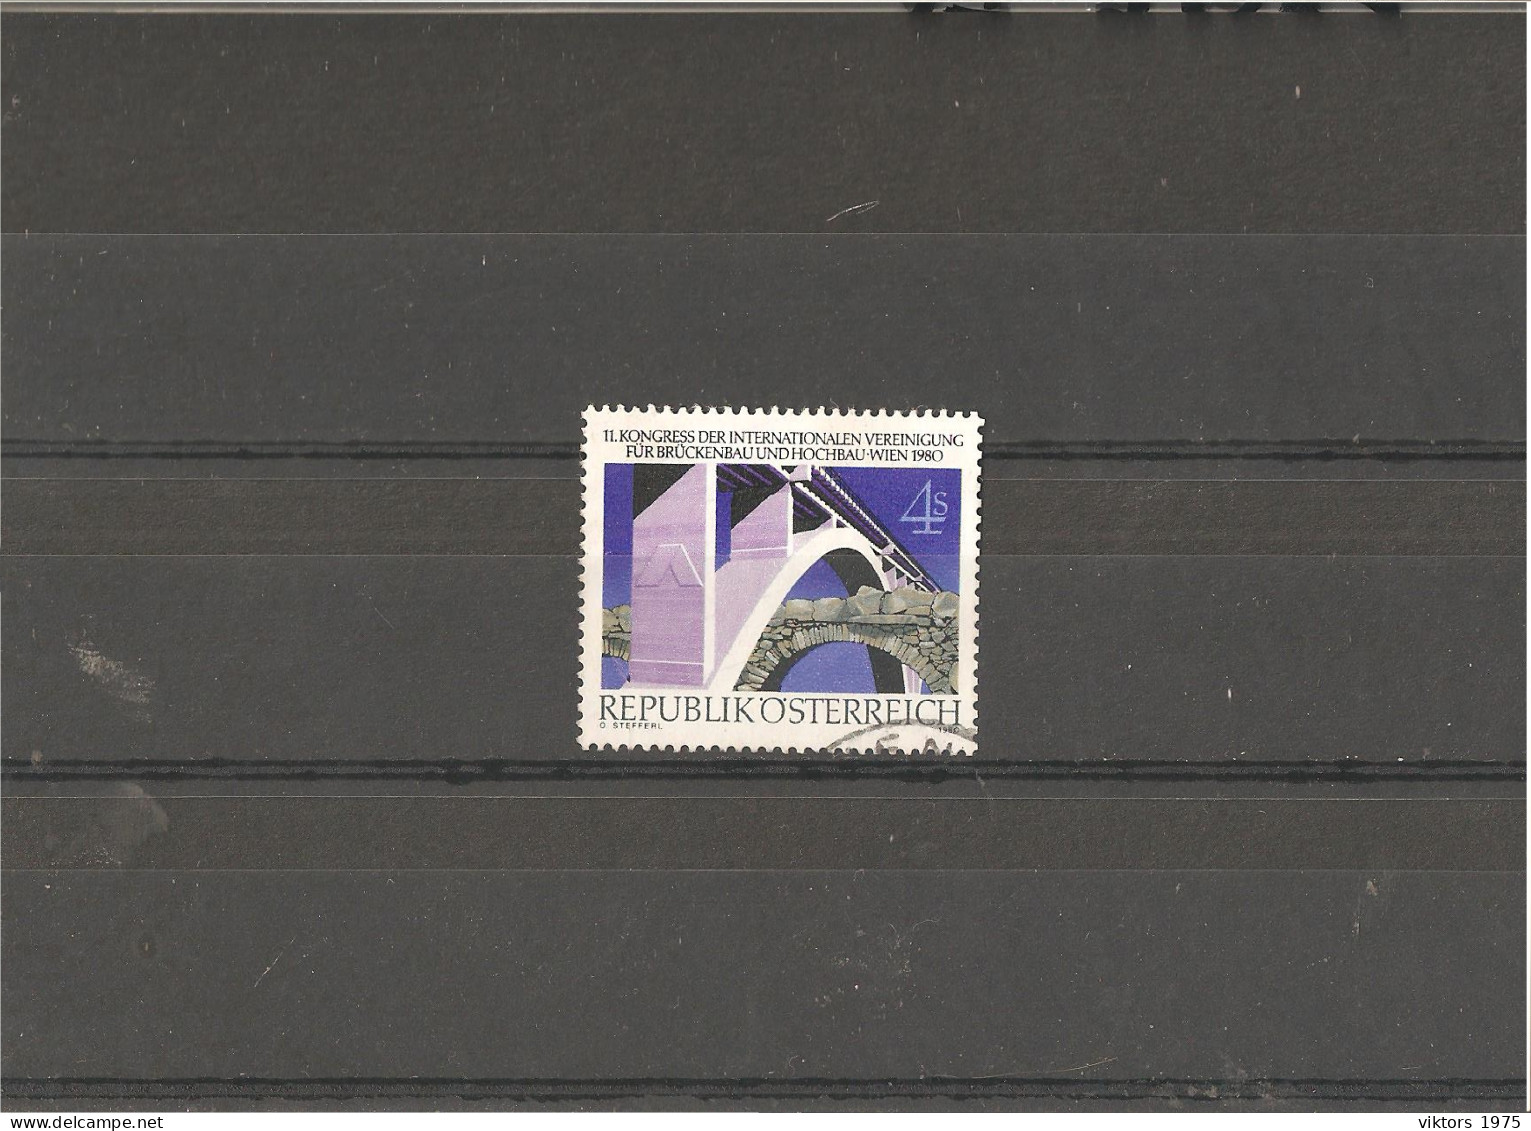 Used Stamp Nr.1653 In MICHEL Catalog - Gebraucht